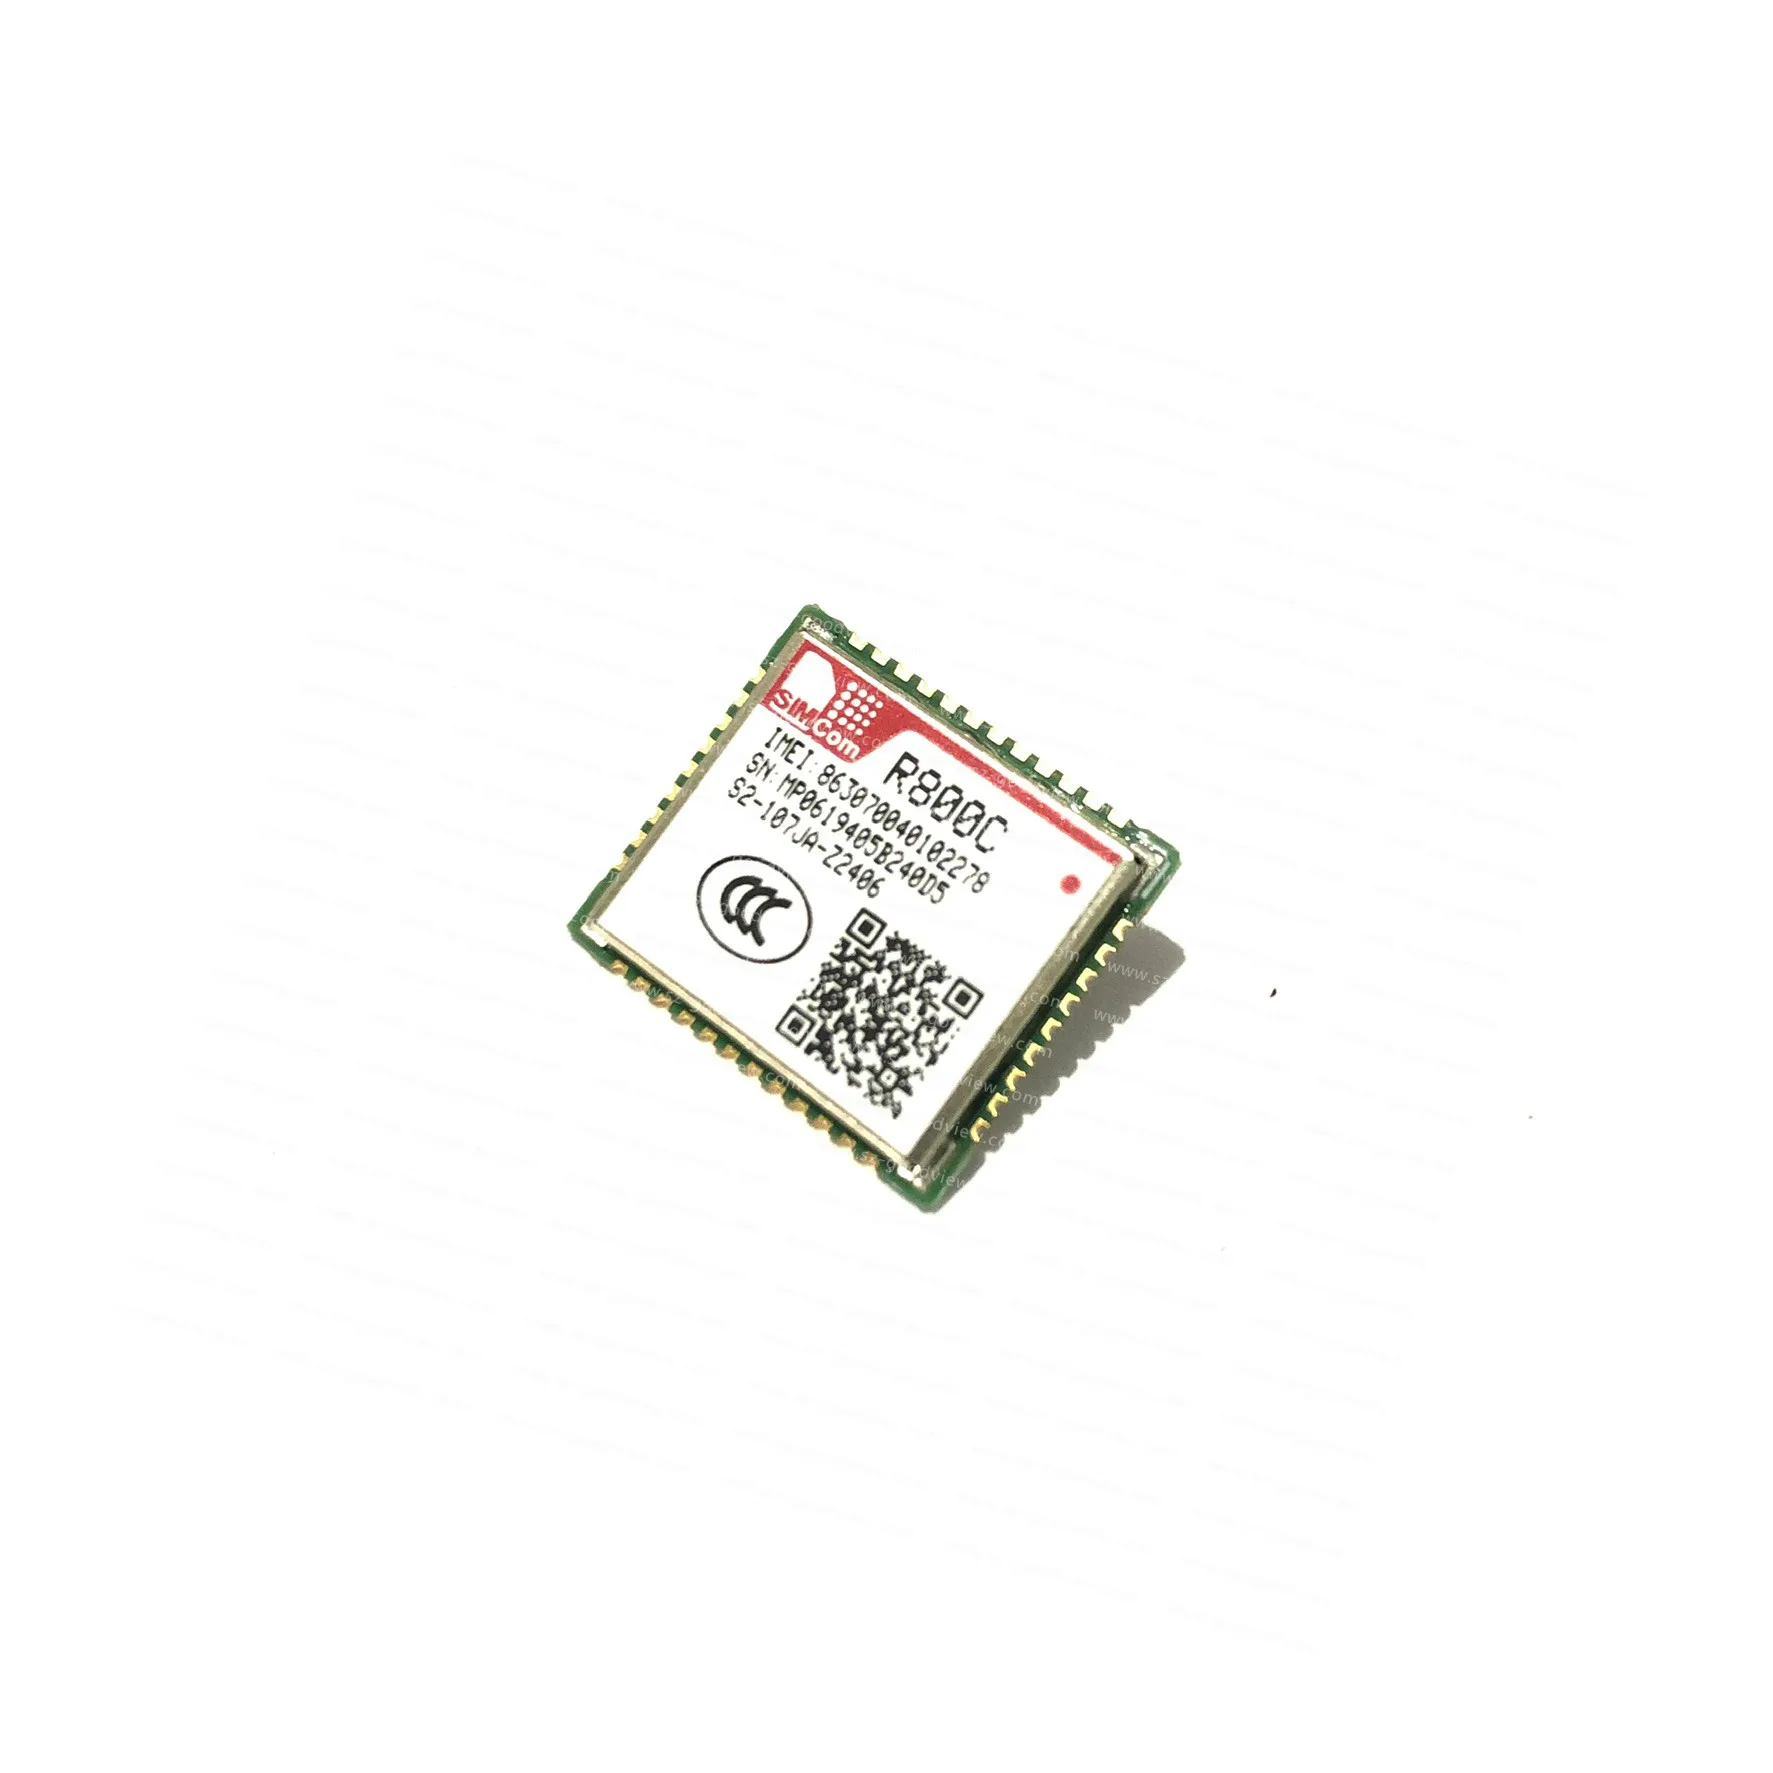 

SIMCOM R800C 2G GSM/GPRS Module